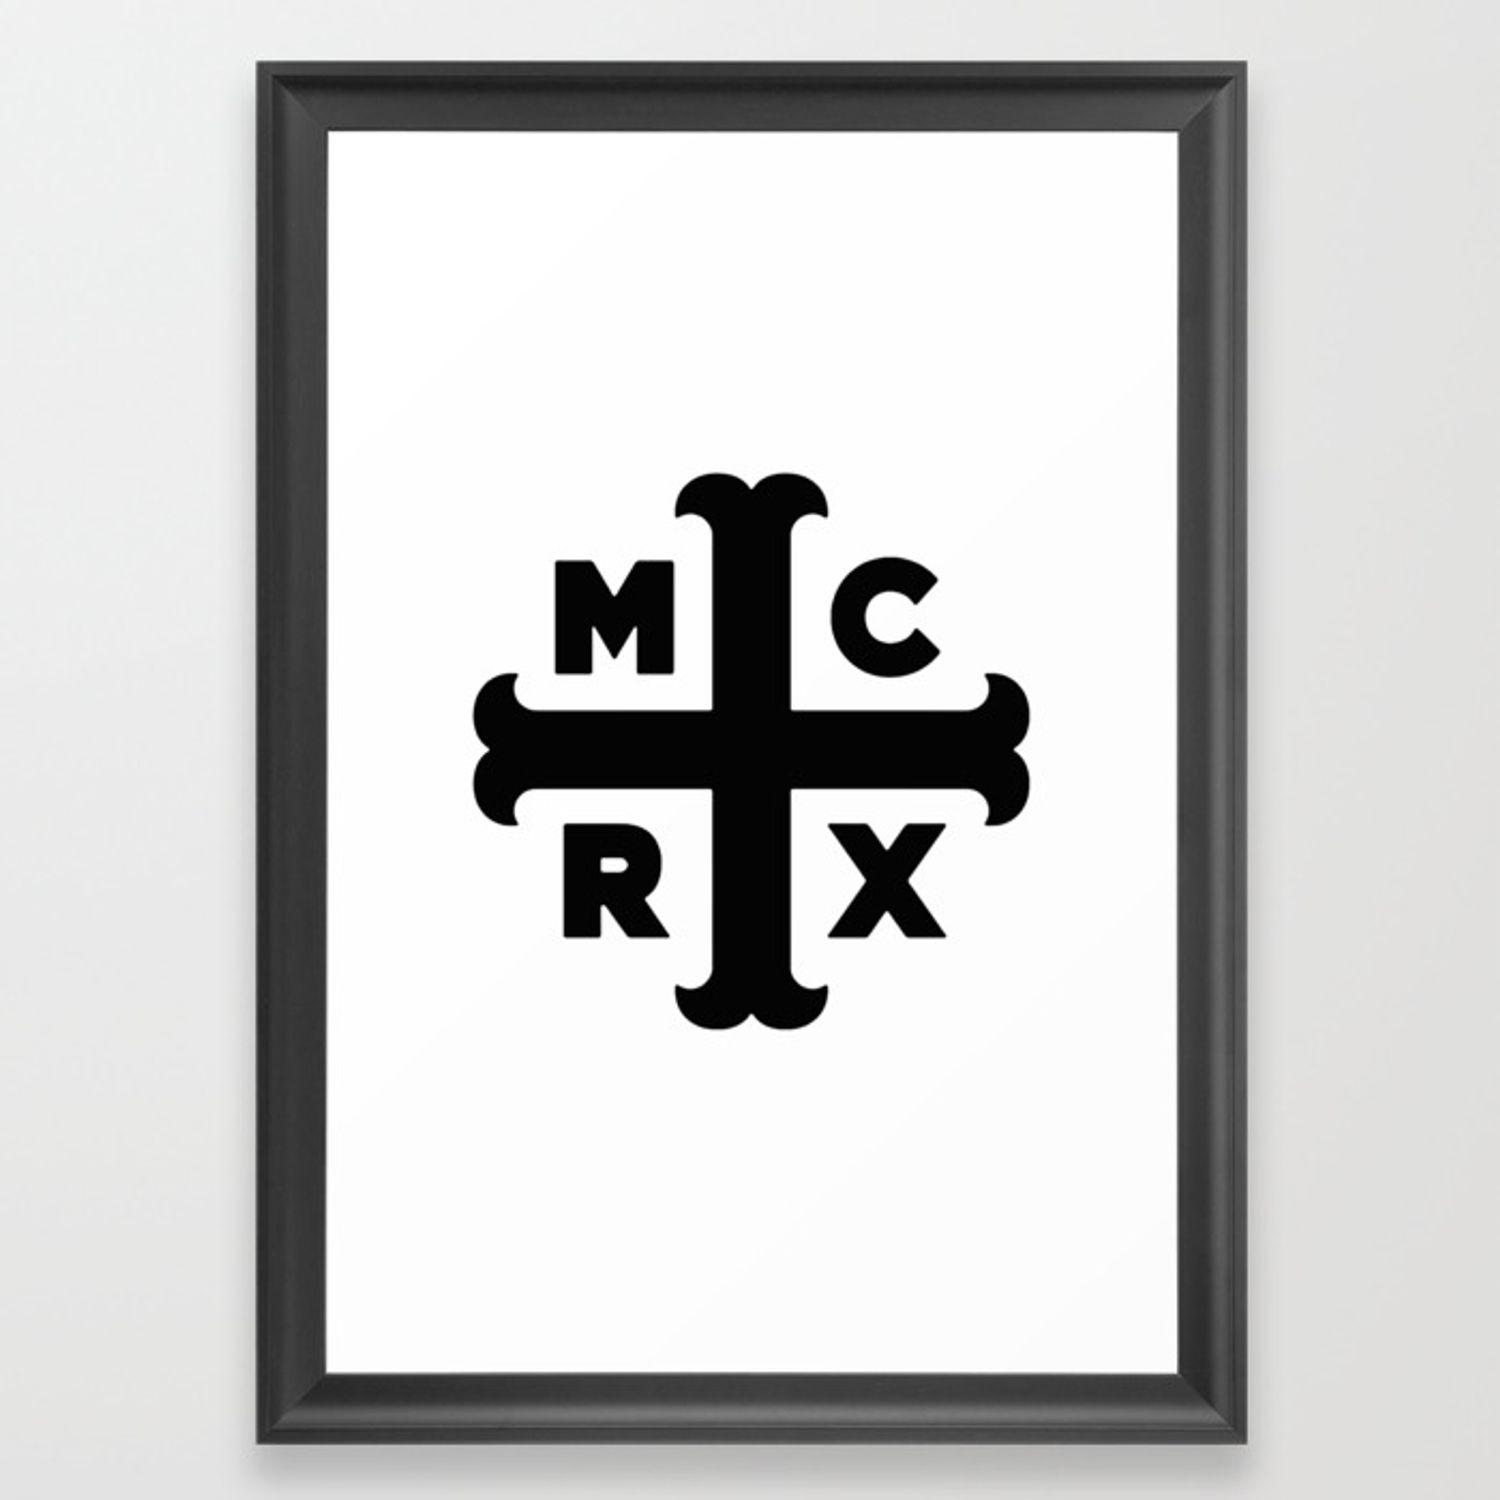 Mcrx Logo - MCRX BLACK Framed Art Print